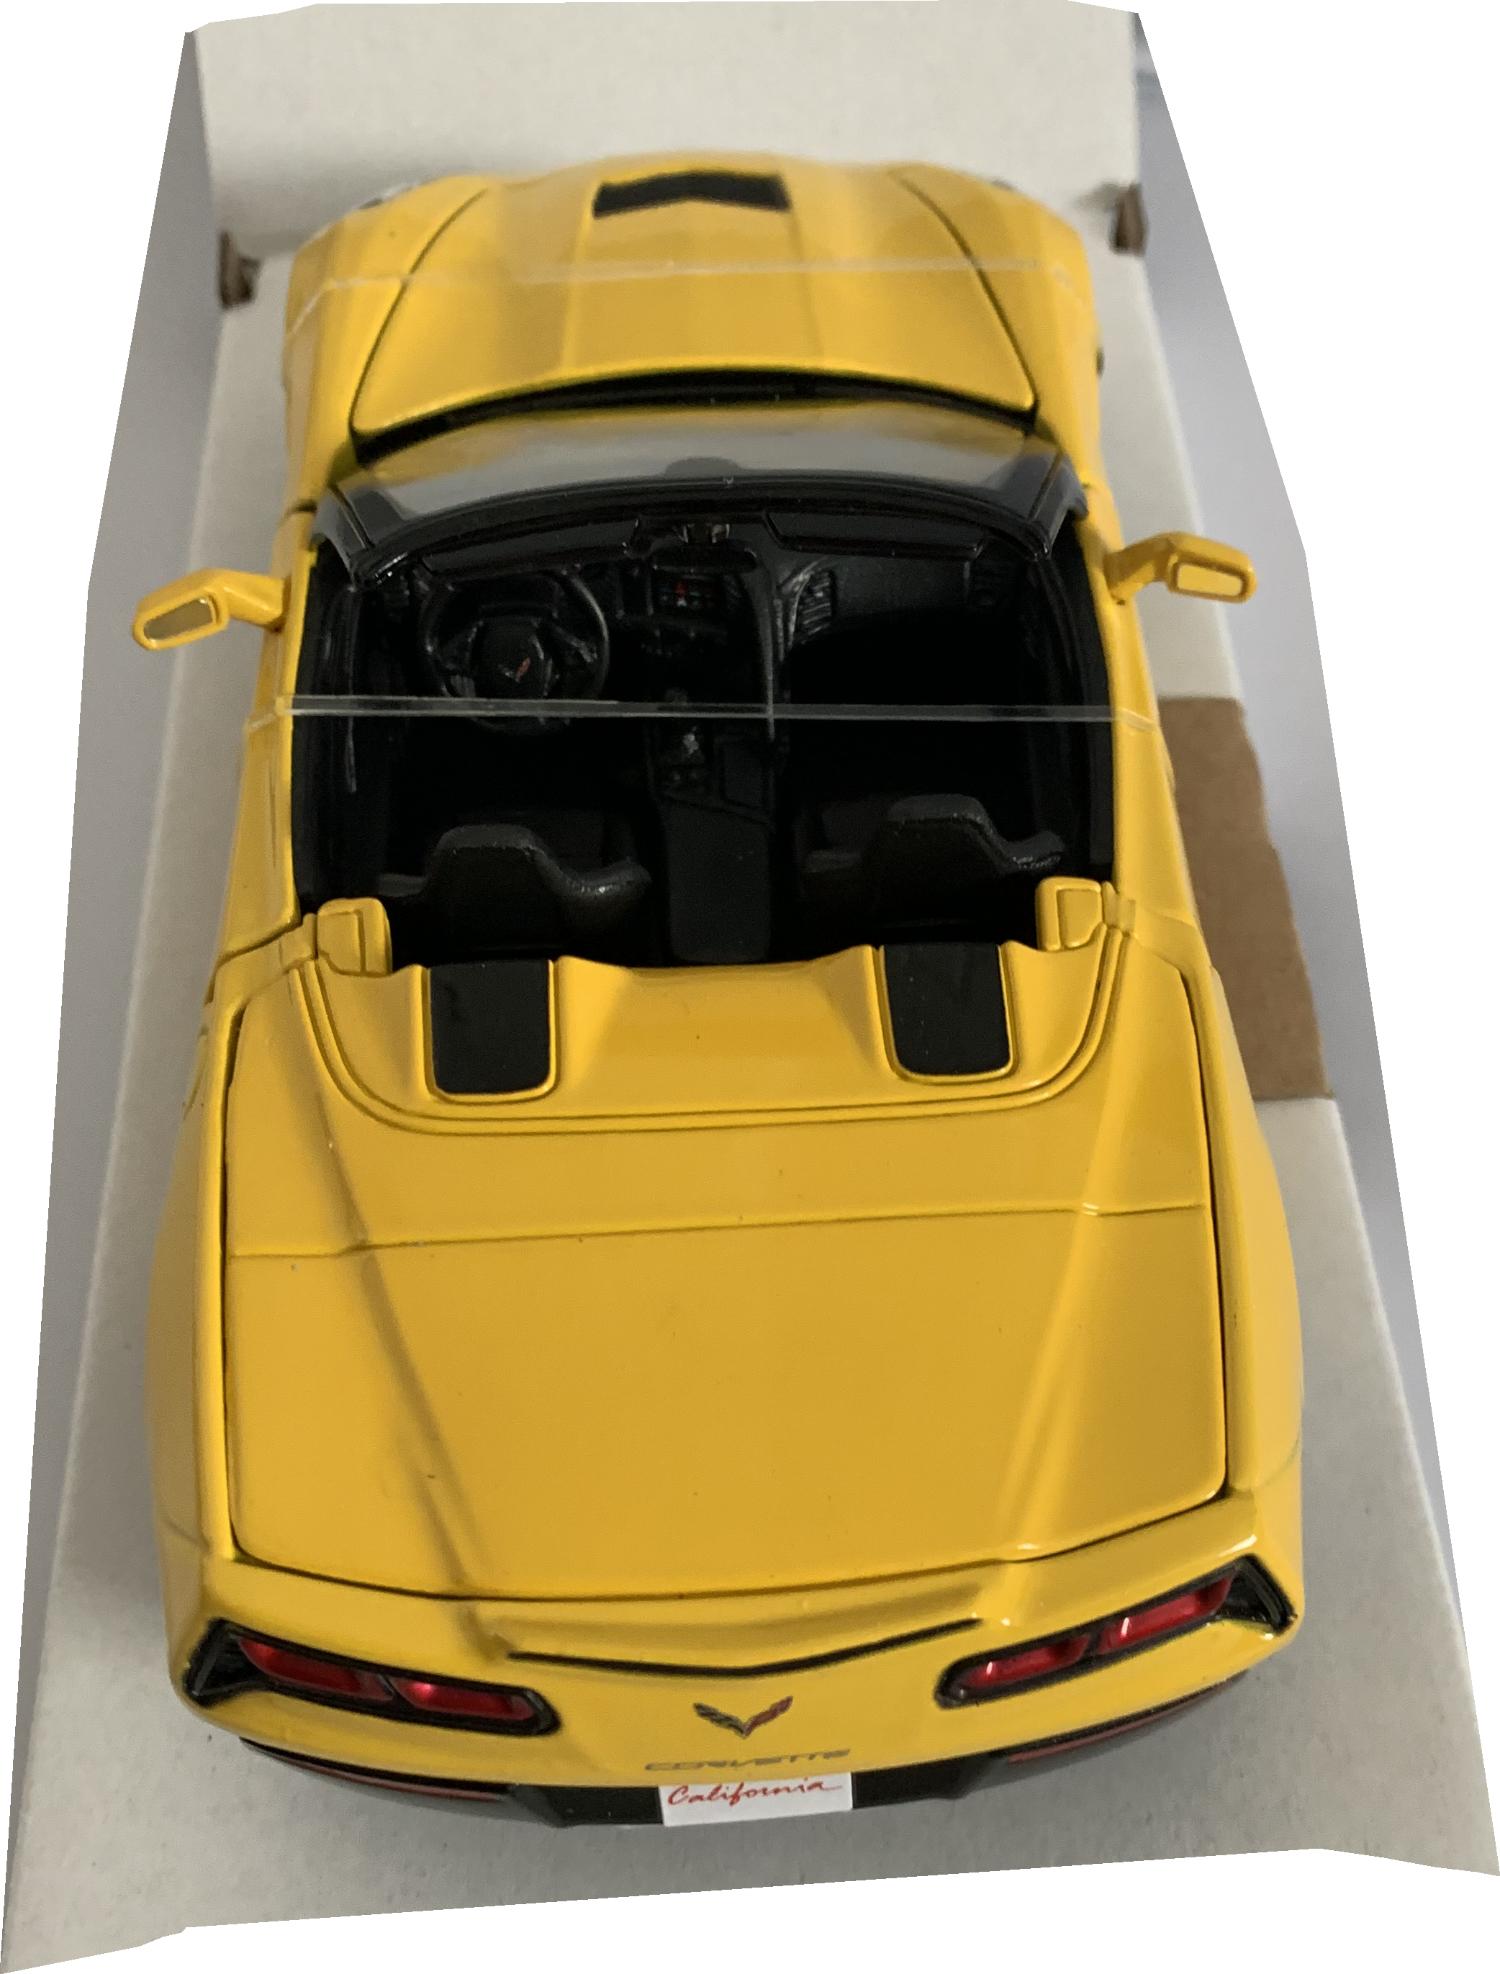 Chevrolet Corvette Stingray Convertible 2014 in yellow 1 :24 scale model from Maisto